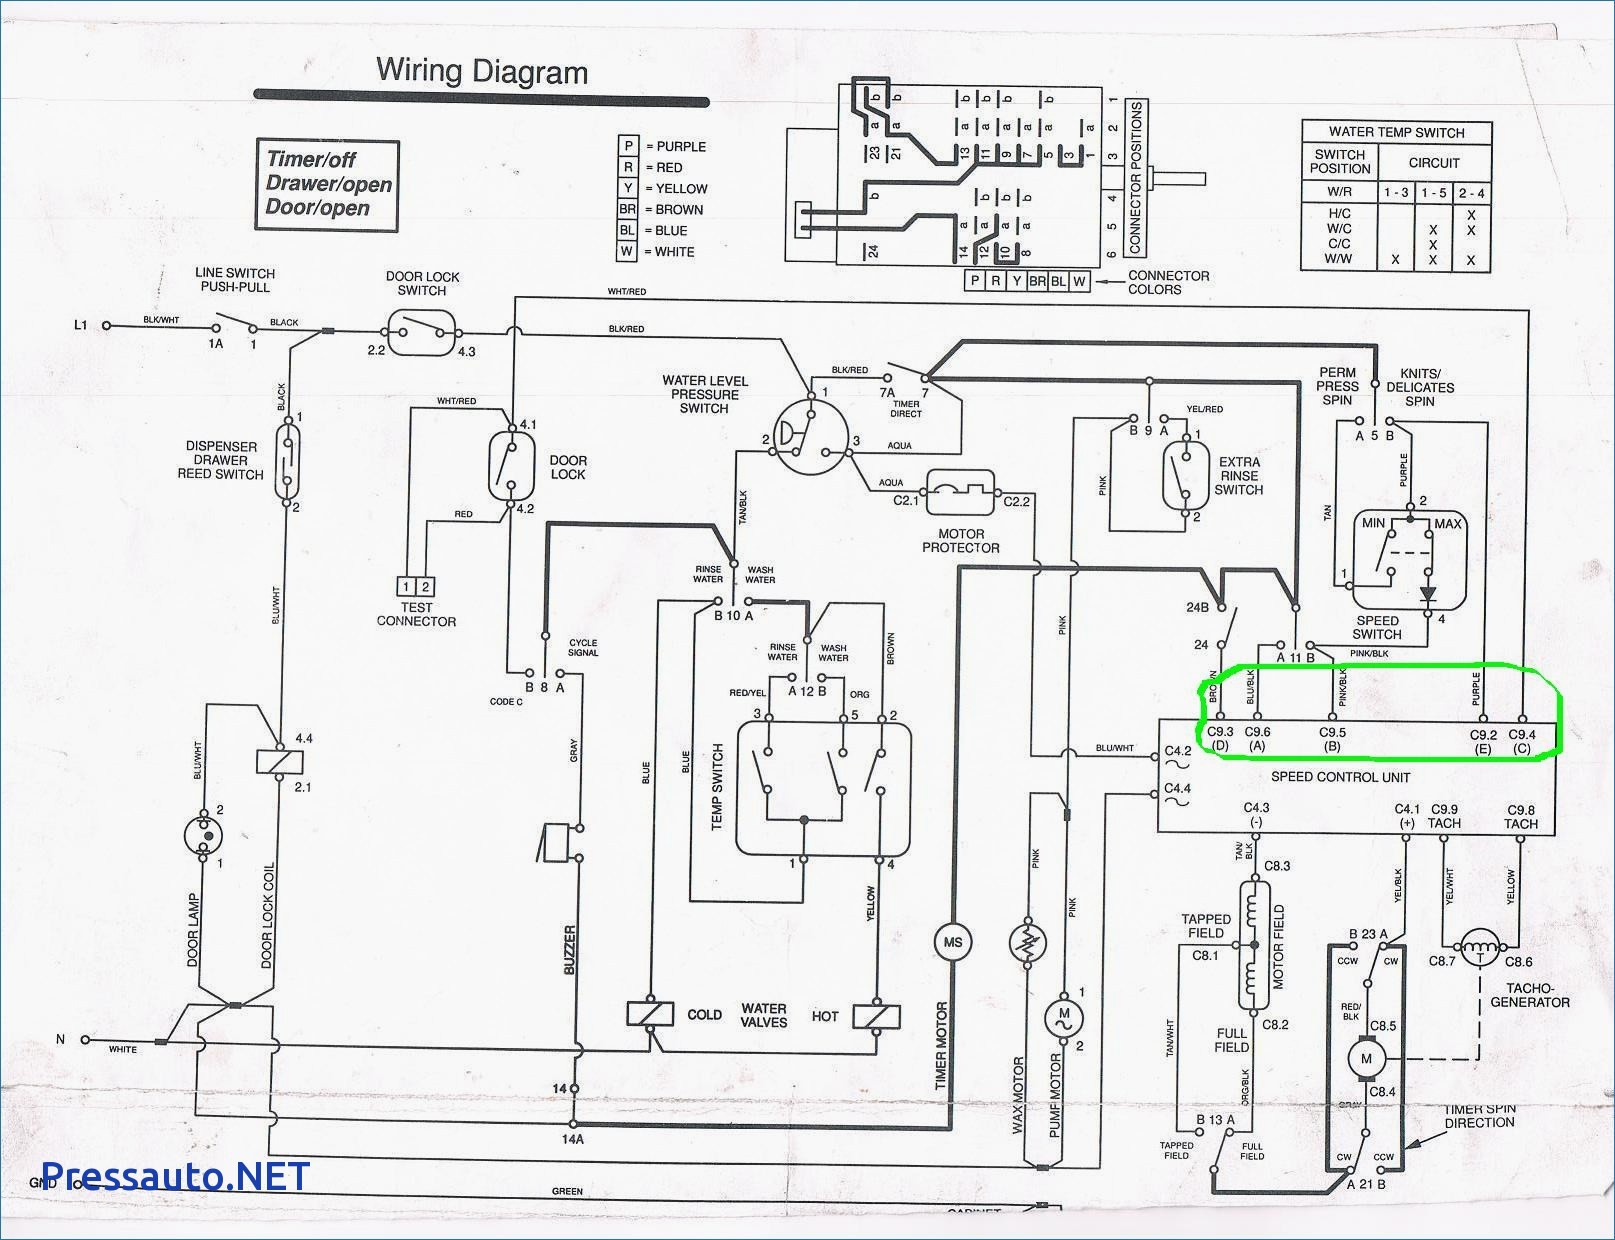 Wiring Diagram for Whirlpool Dryer Whirlpool Electric Dryer Wiring Diagram Shahsramblings Of Wiring Diagram for Whirlpool Dryer